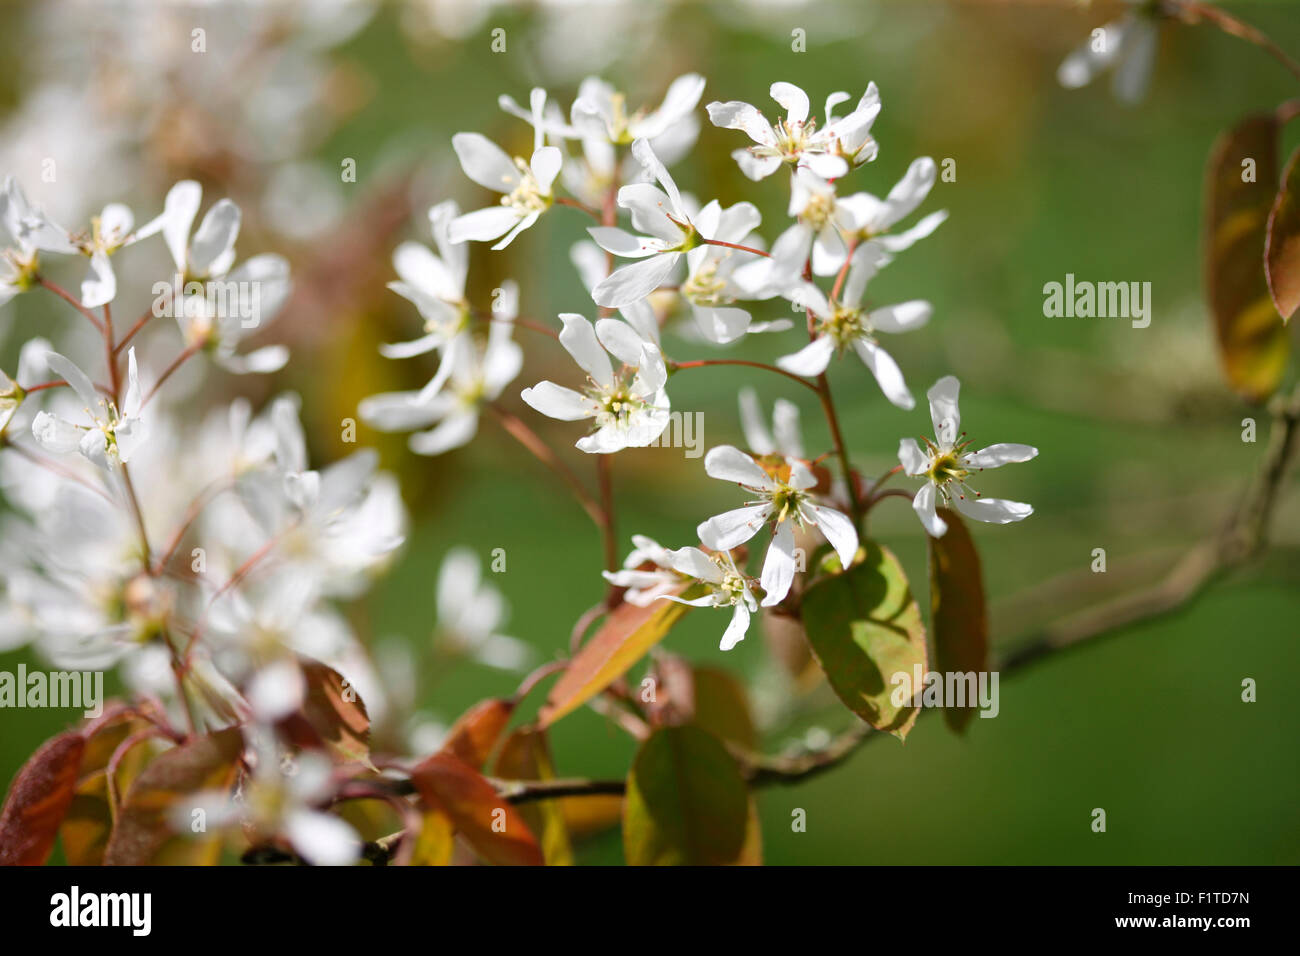 Serviceberry delicate white flowers in the Spring sunshine Jane Ann Butler Photography JABP1383 Stock Photo